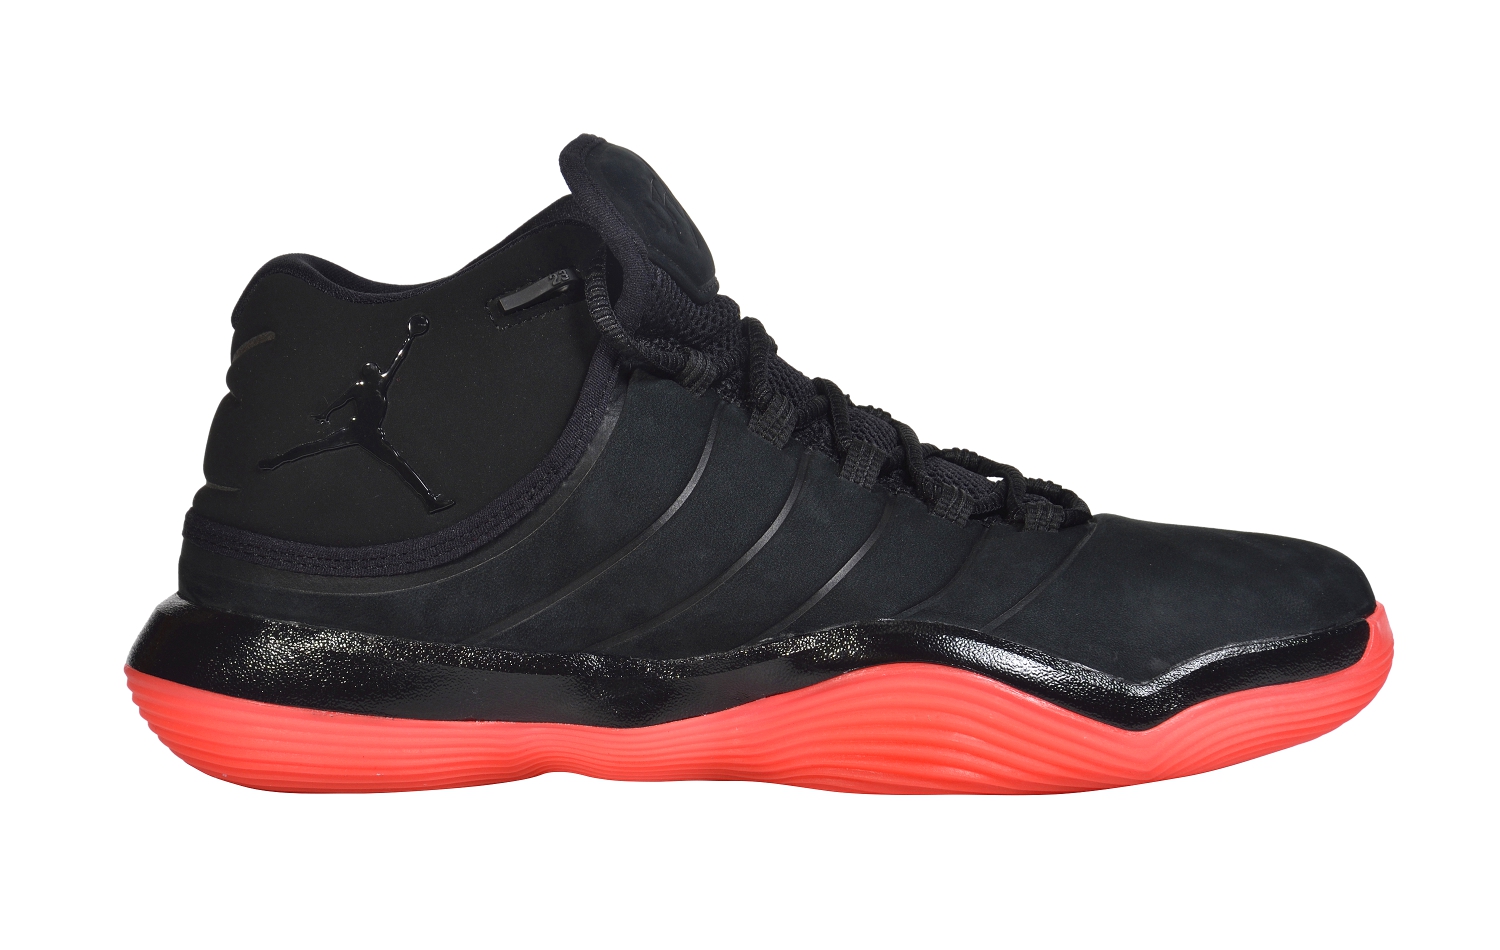 Jordan Super.fly 2017, Black/Black-Infrared 23 férfi cipő eladó, ár |  Garage Store Webshop